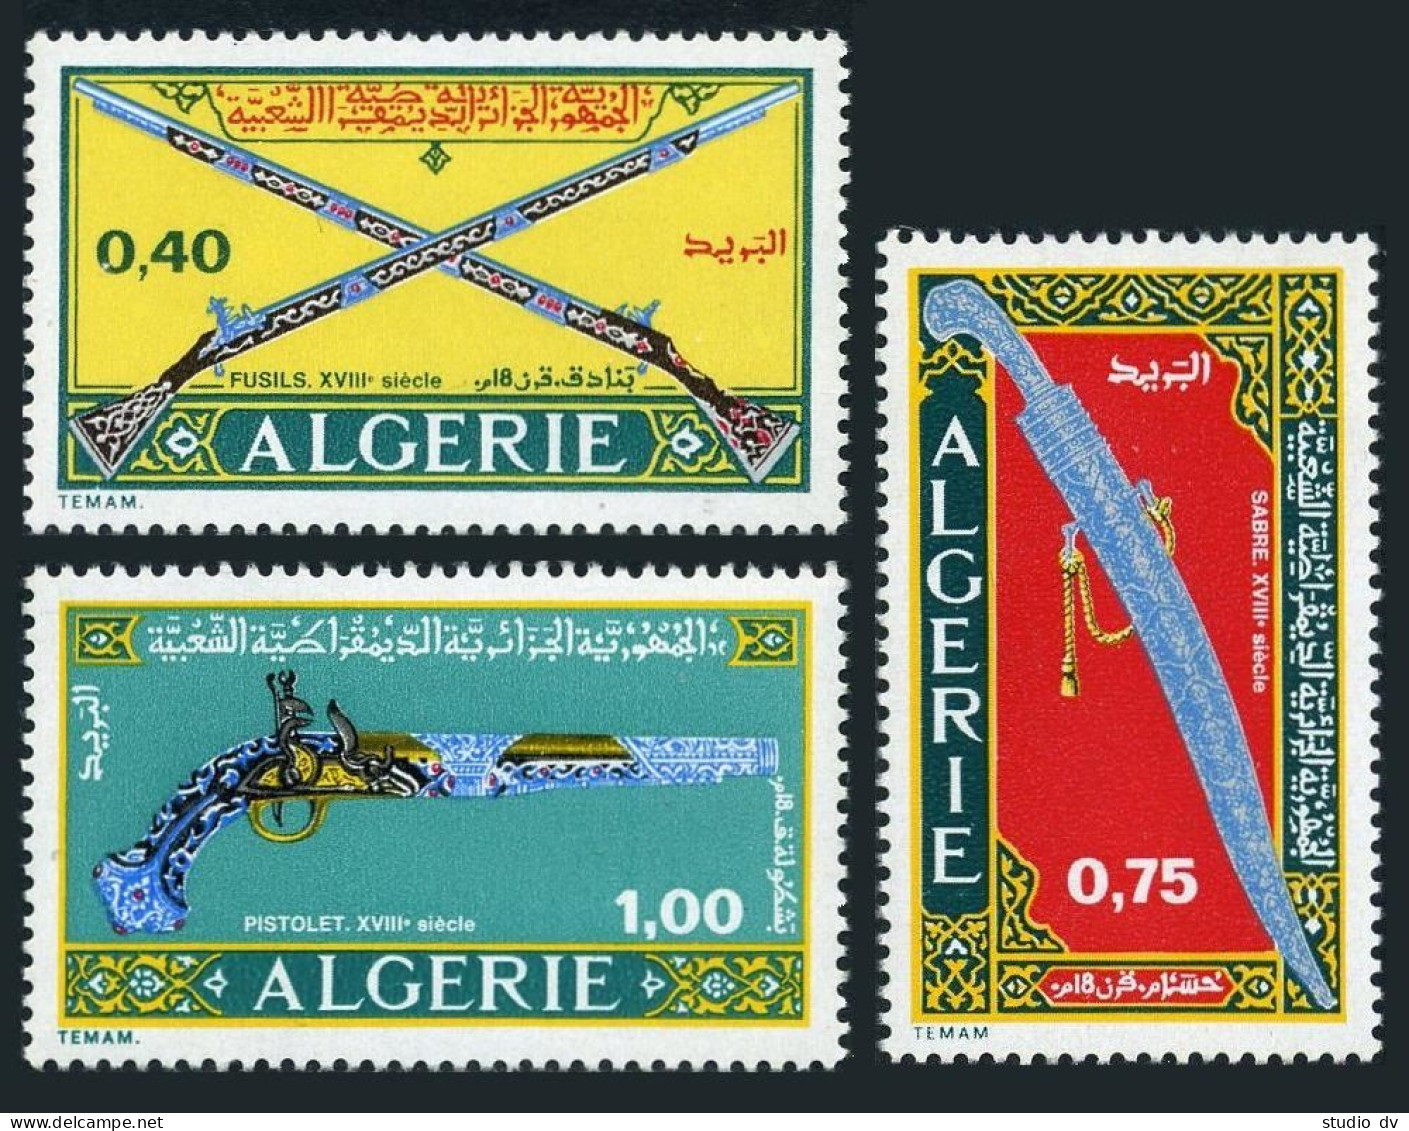 Algeria 444-446,MNH.Michel 553-555. Weapons 1970.Saber,Guns,Pistol. - Algerije (1962-...)